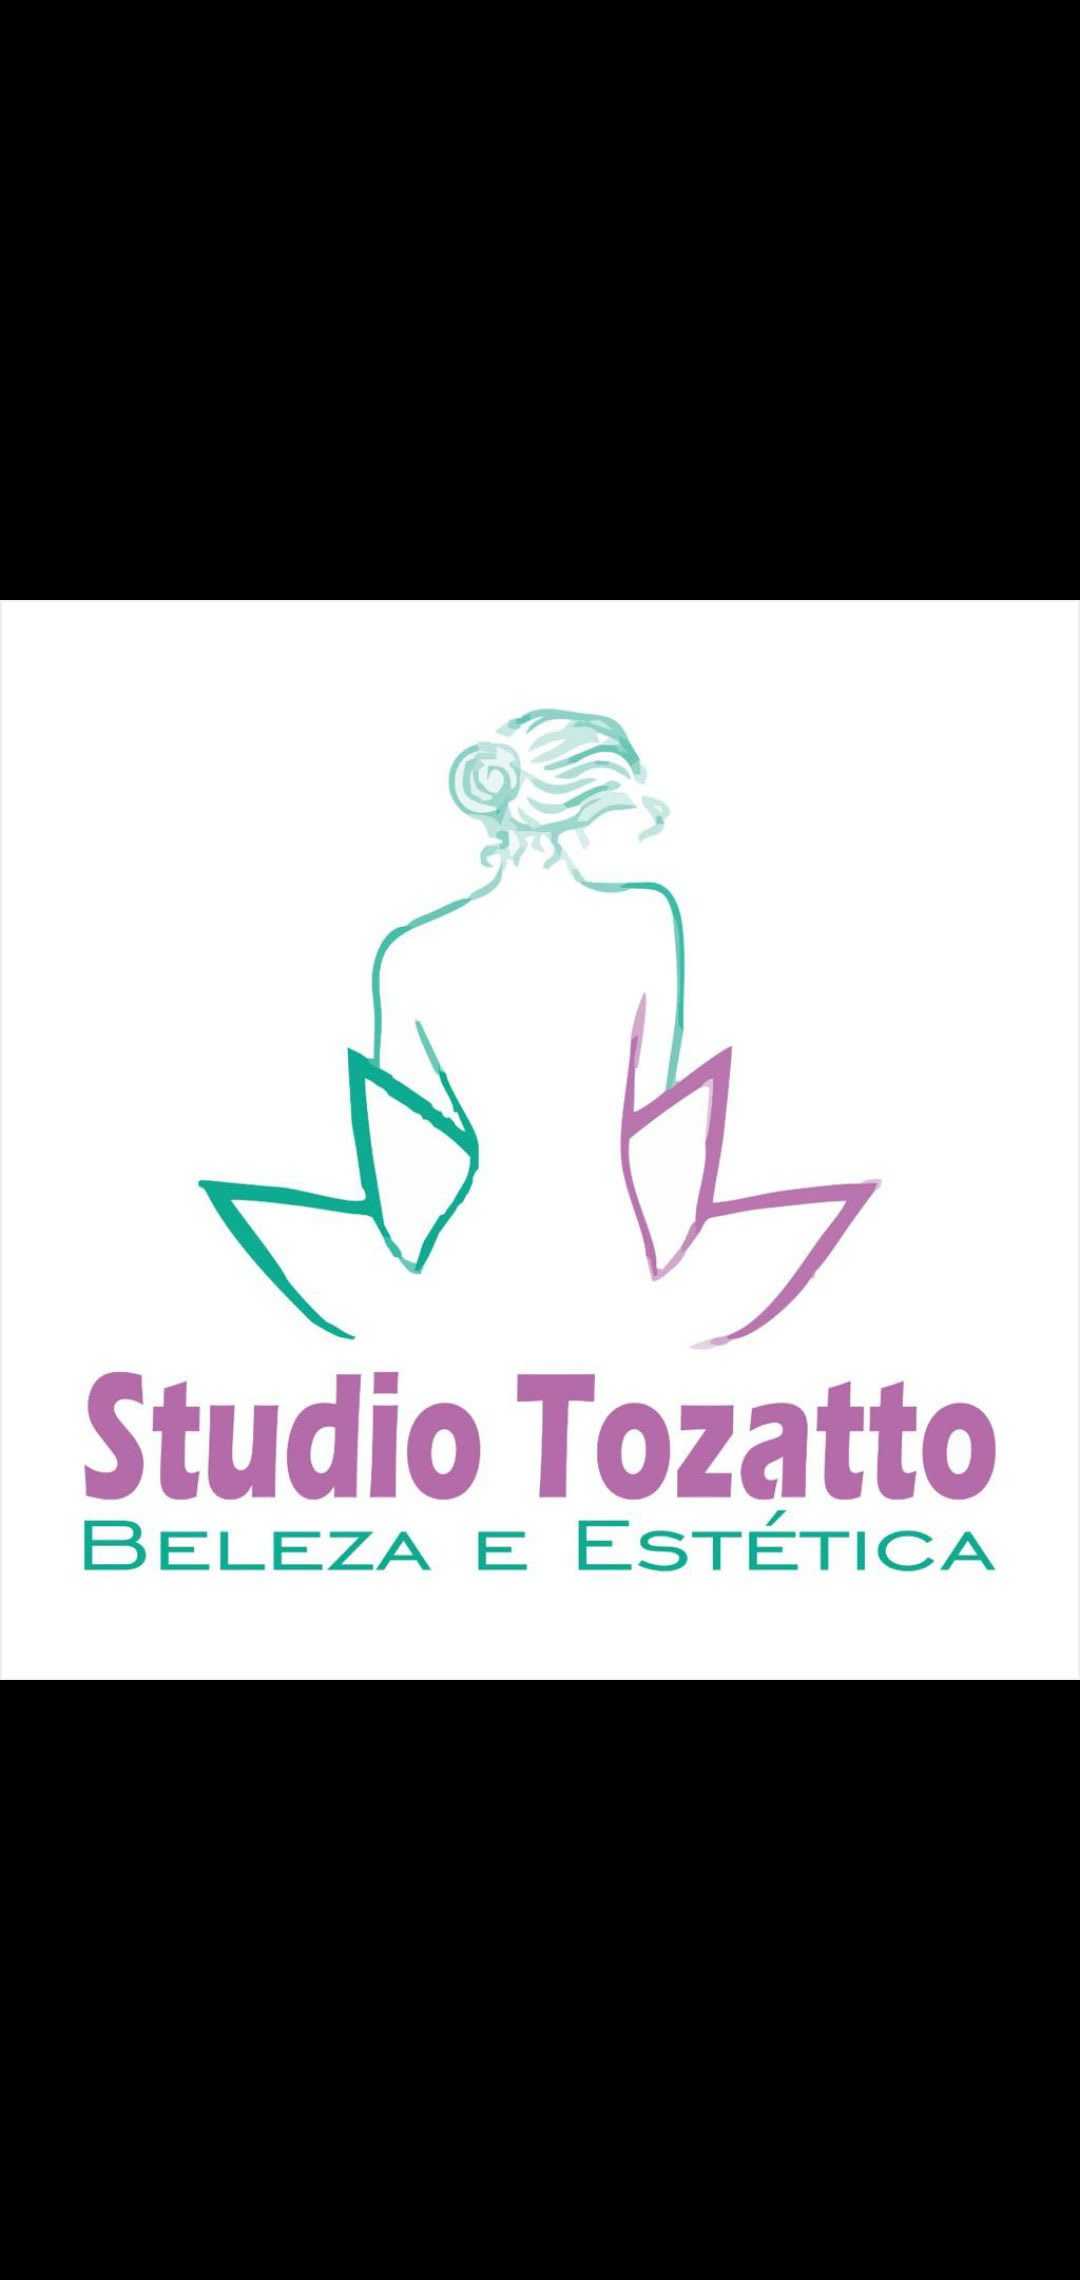 Studio Tozatto